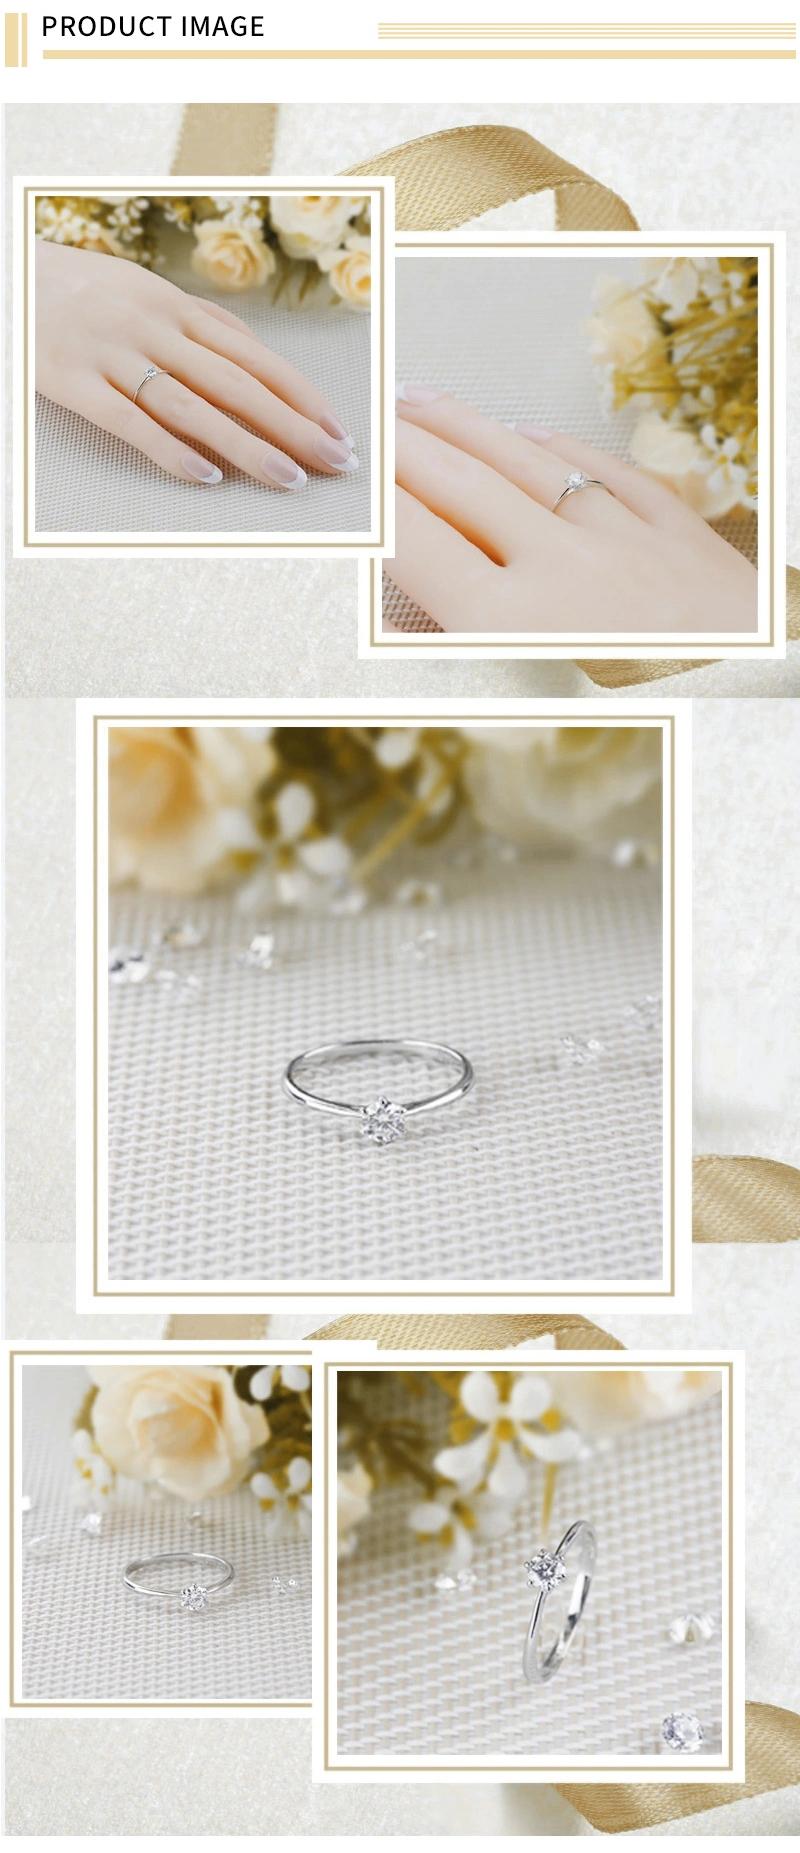 925 Silver Rings Design Bridal Wedding Engagement Ring